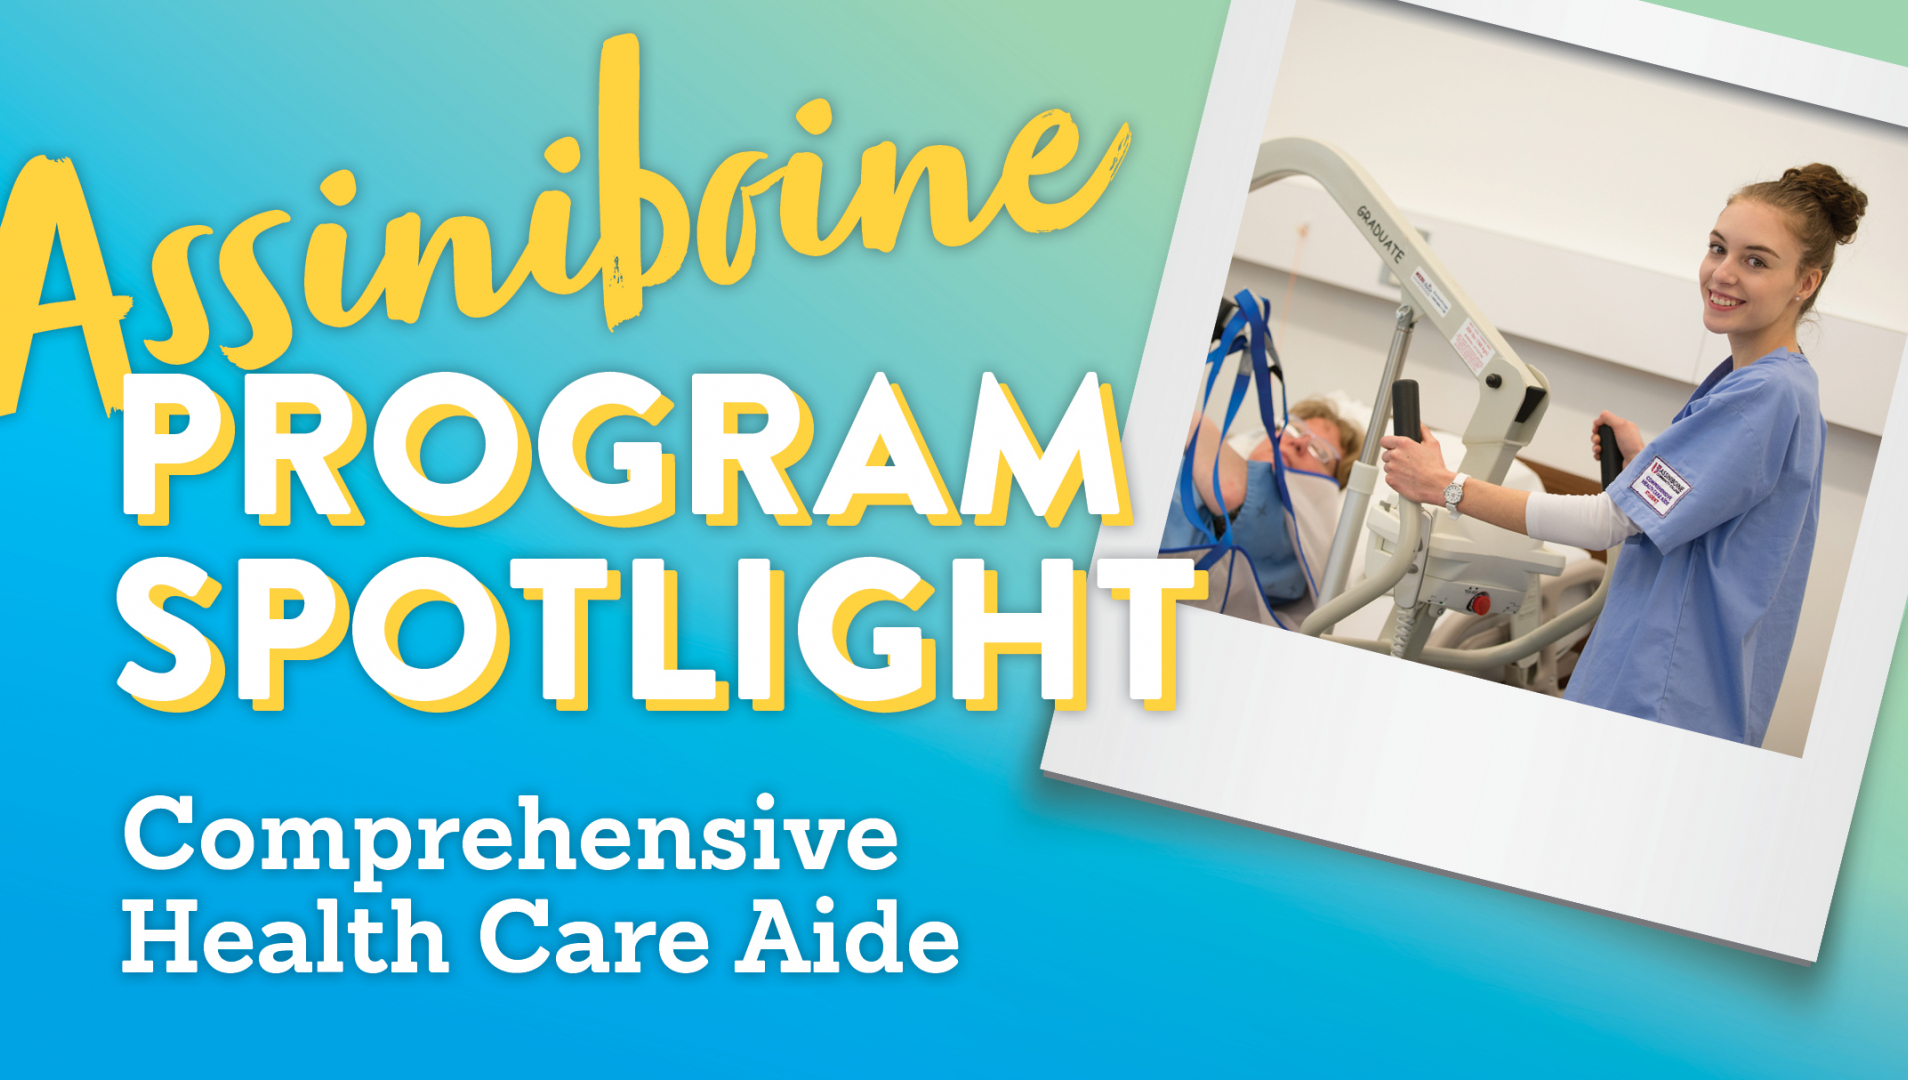 Program Spotlight: Comprehensive Health Care Aide